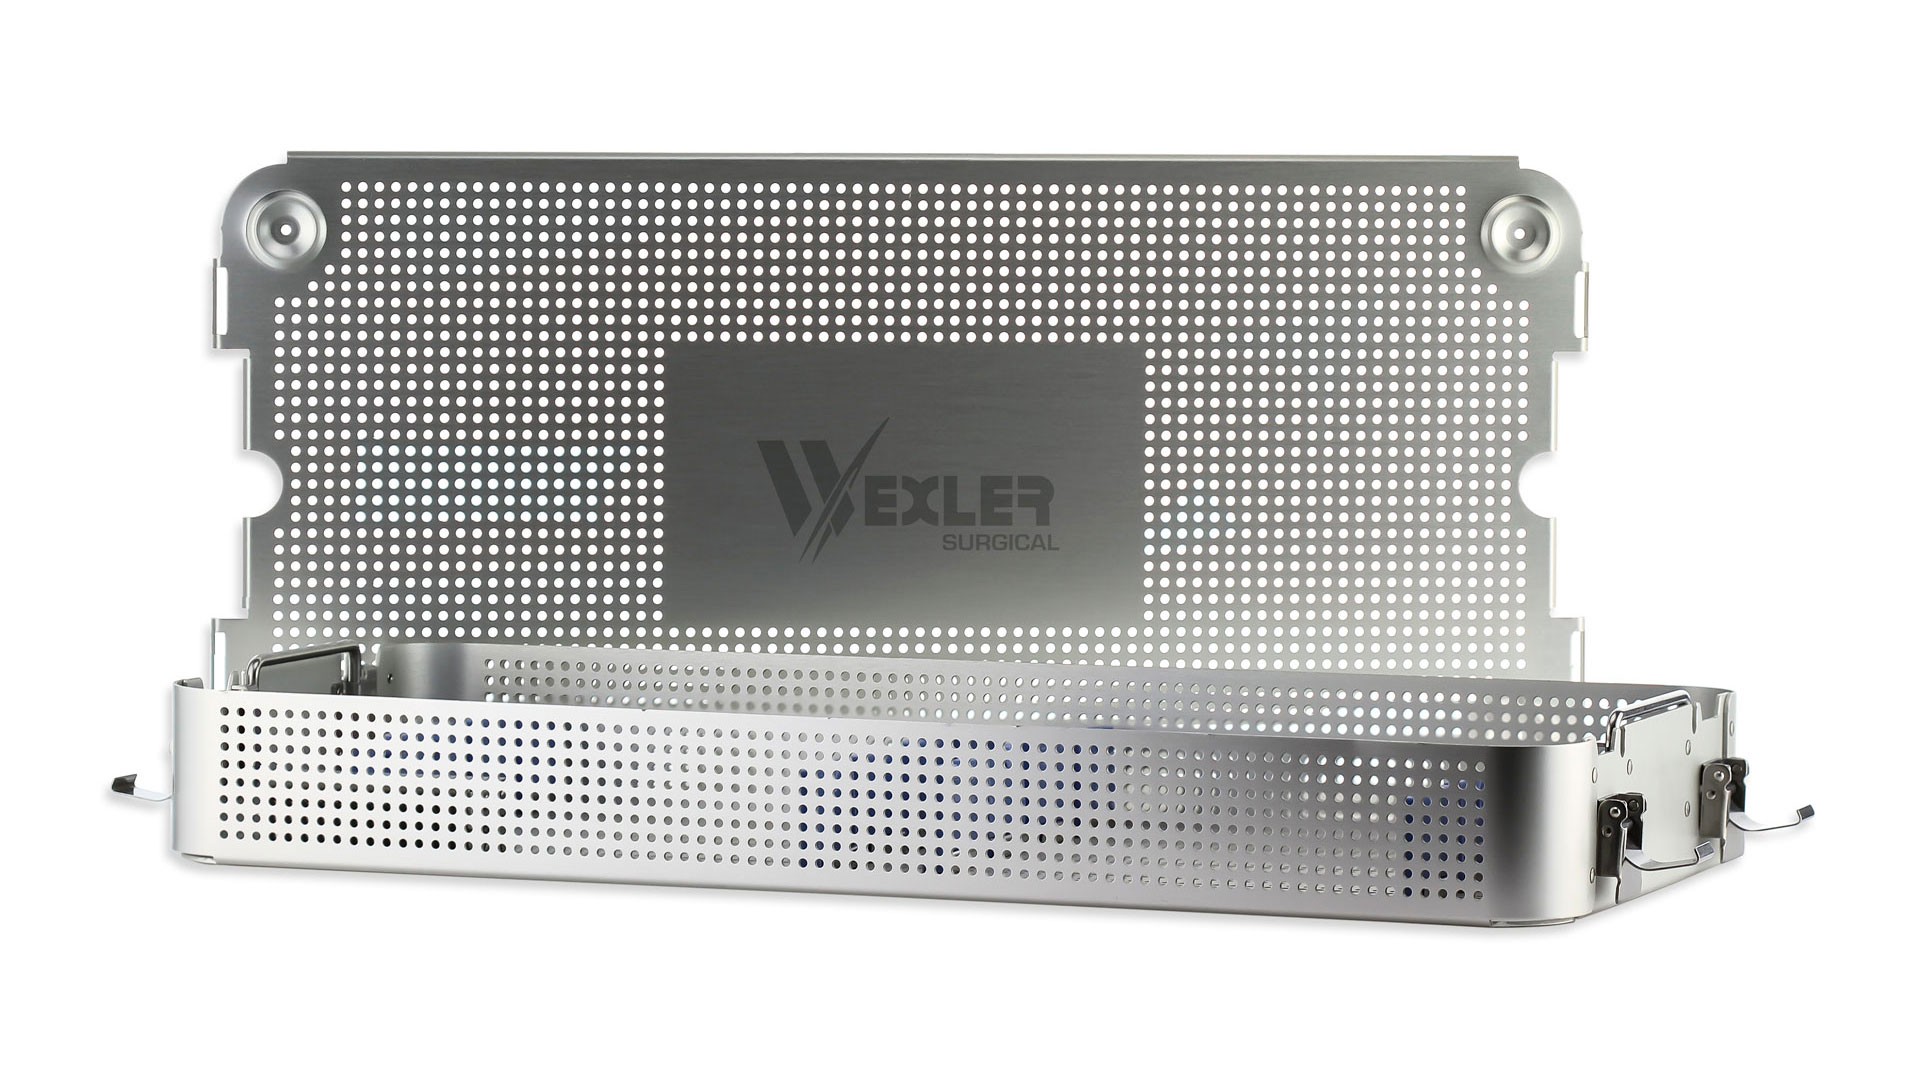 Wexler Metal Sterilization Tray - Single level